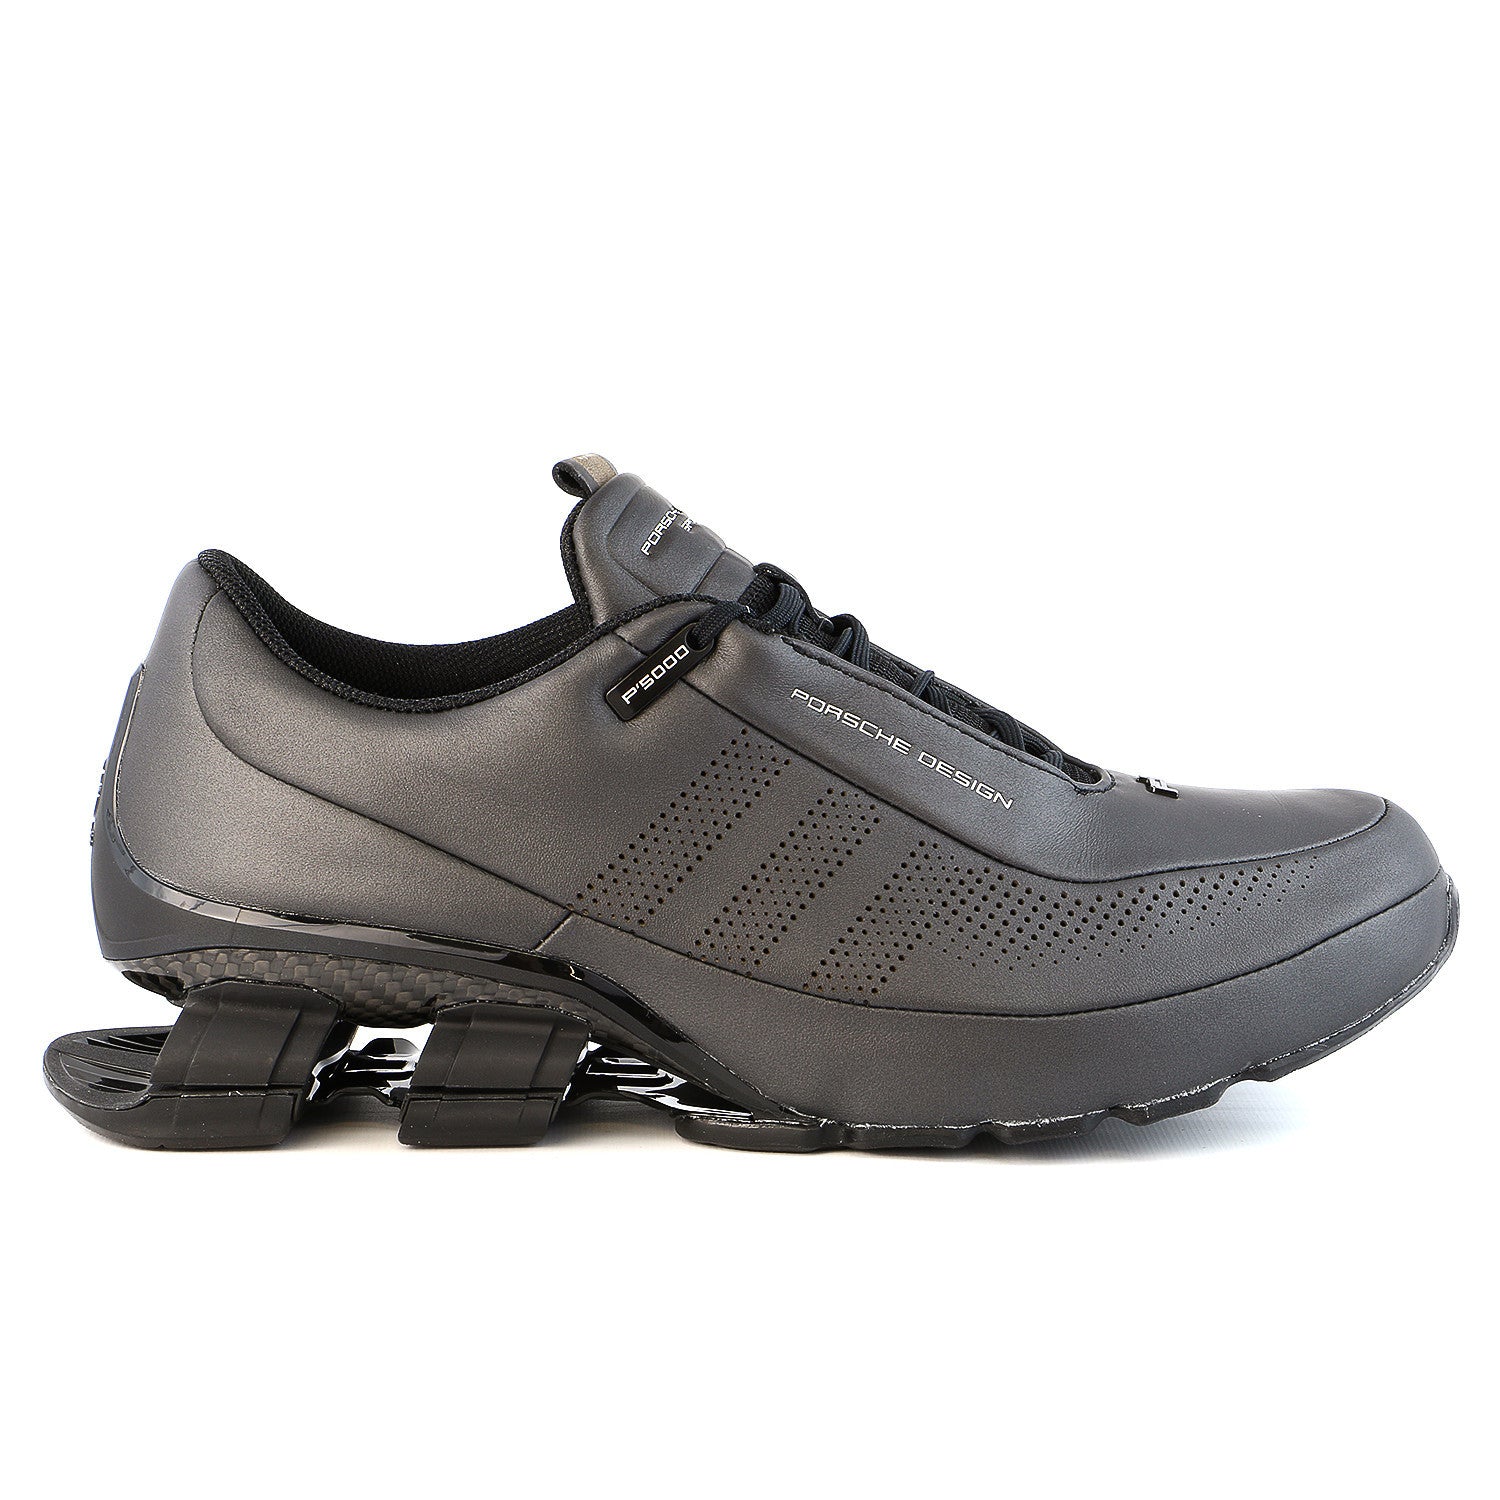 Porsche Design Bounce:S4 Sneaker Leather Shoes Leather - Black 